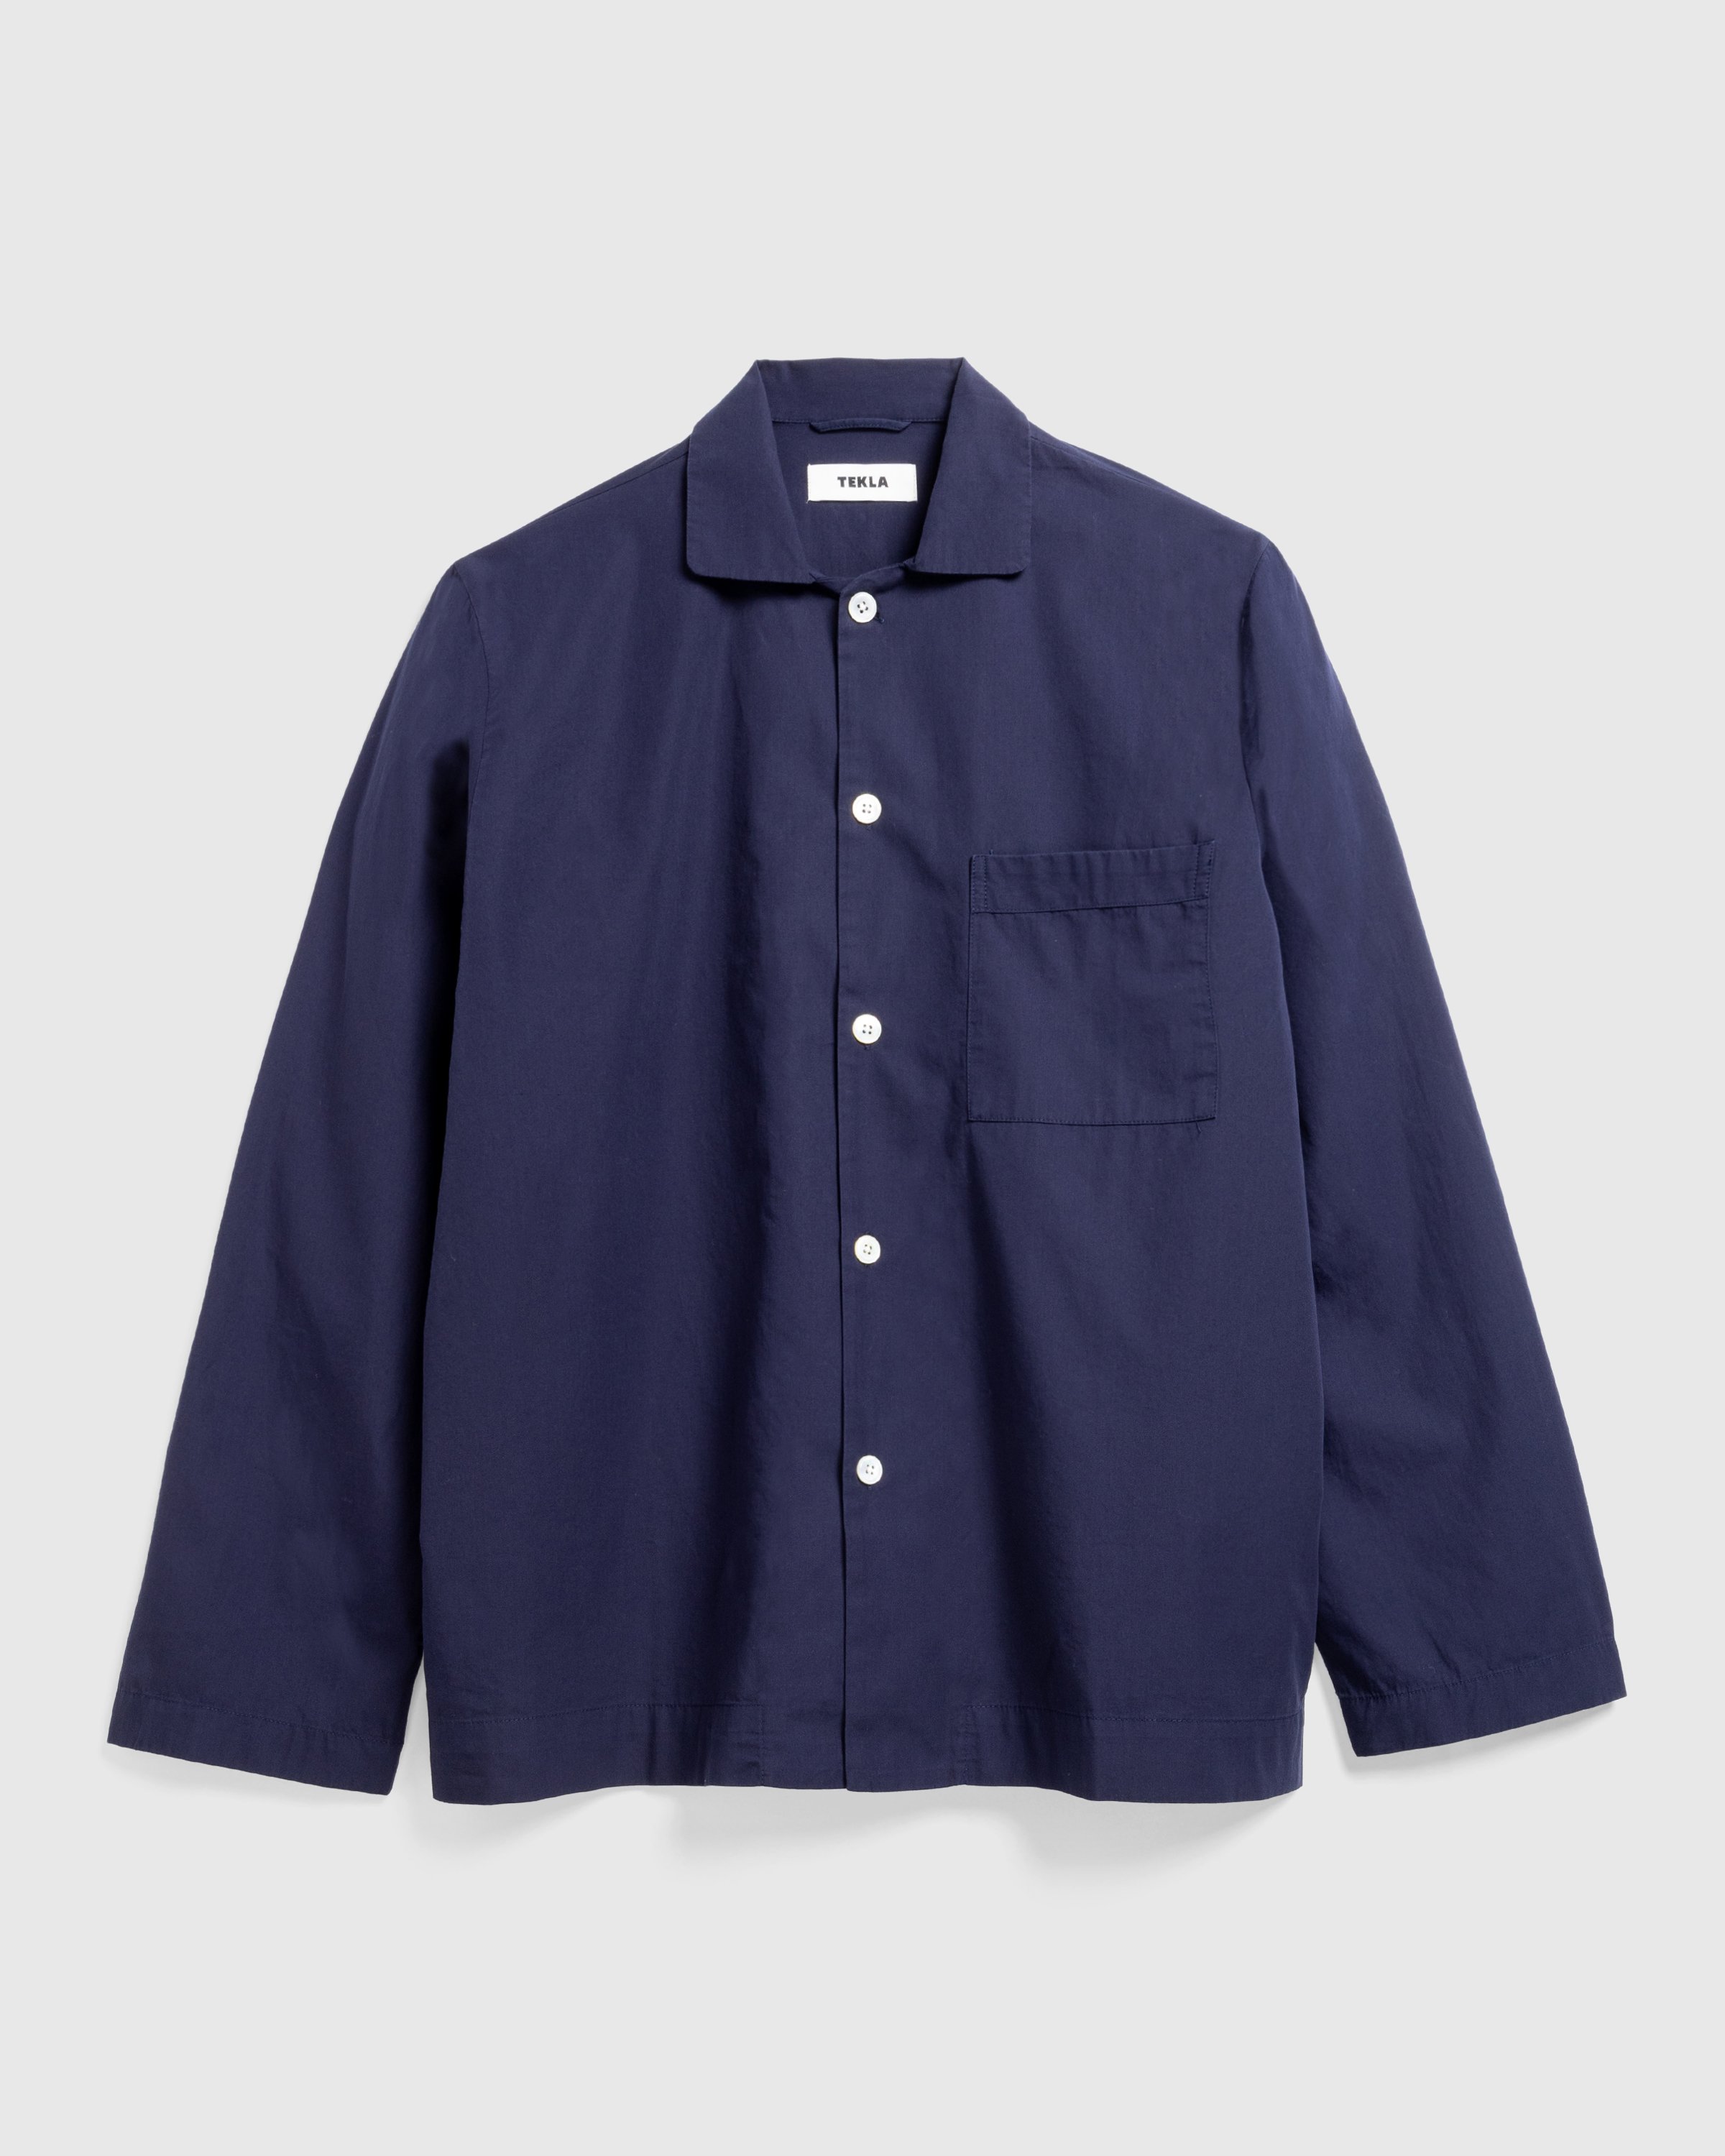 Tekla - Cotton Poplin - Pyjamas Shirt True Navy - Clothing - Blue - Image 1